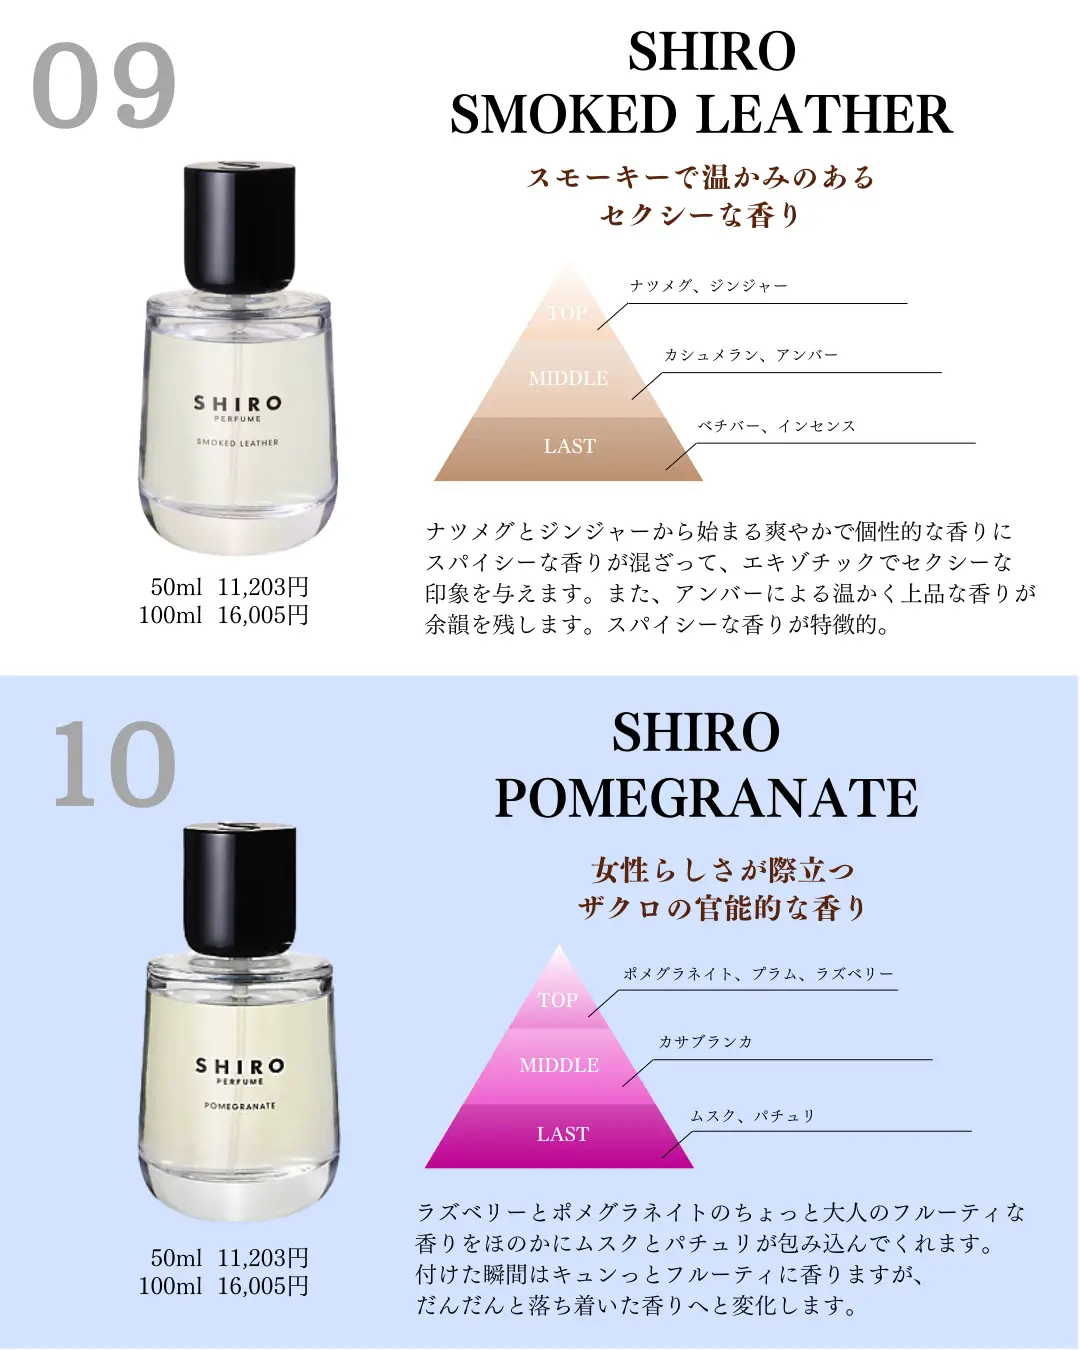 Introducing SHIRO's popular perfume [Perfume series]   | Gallery